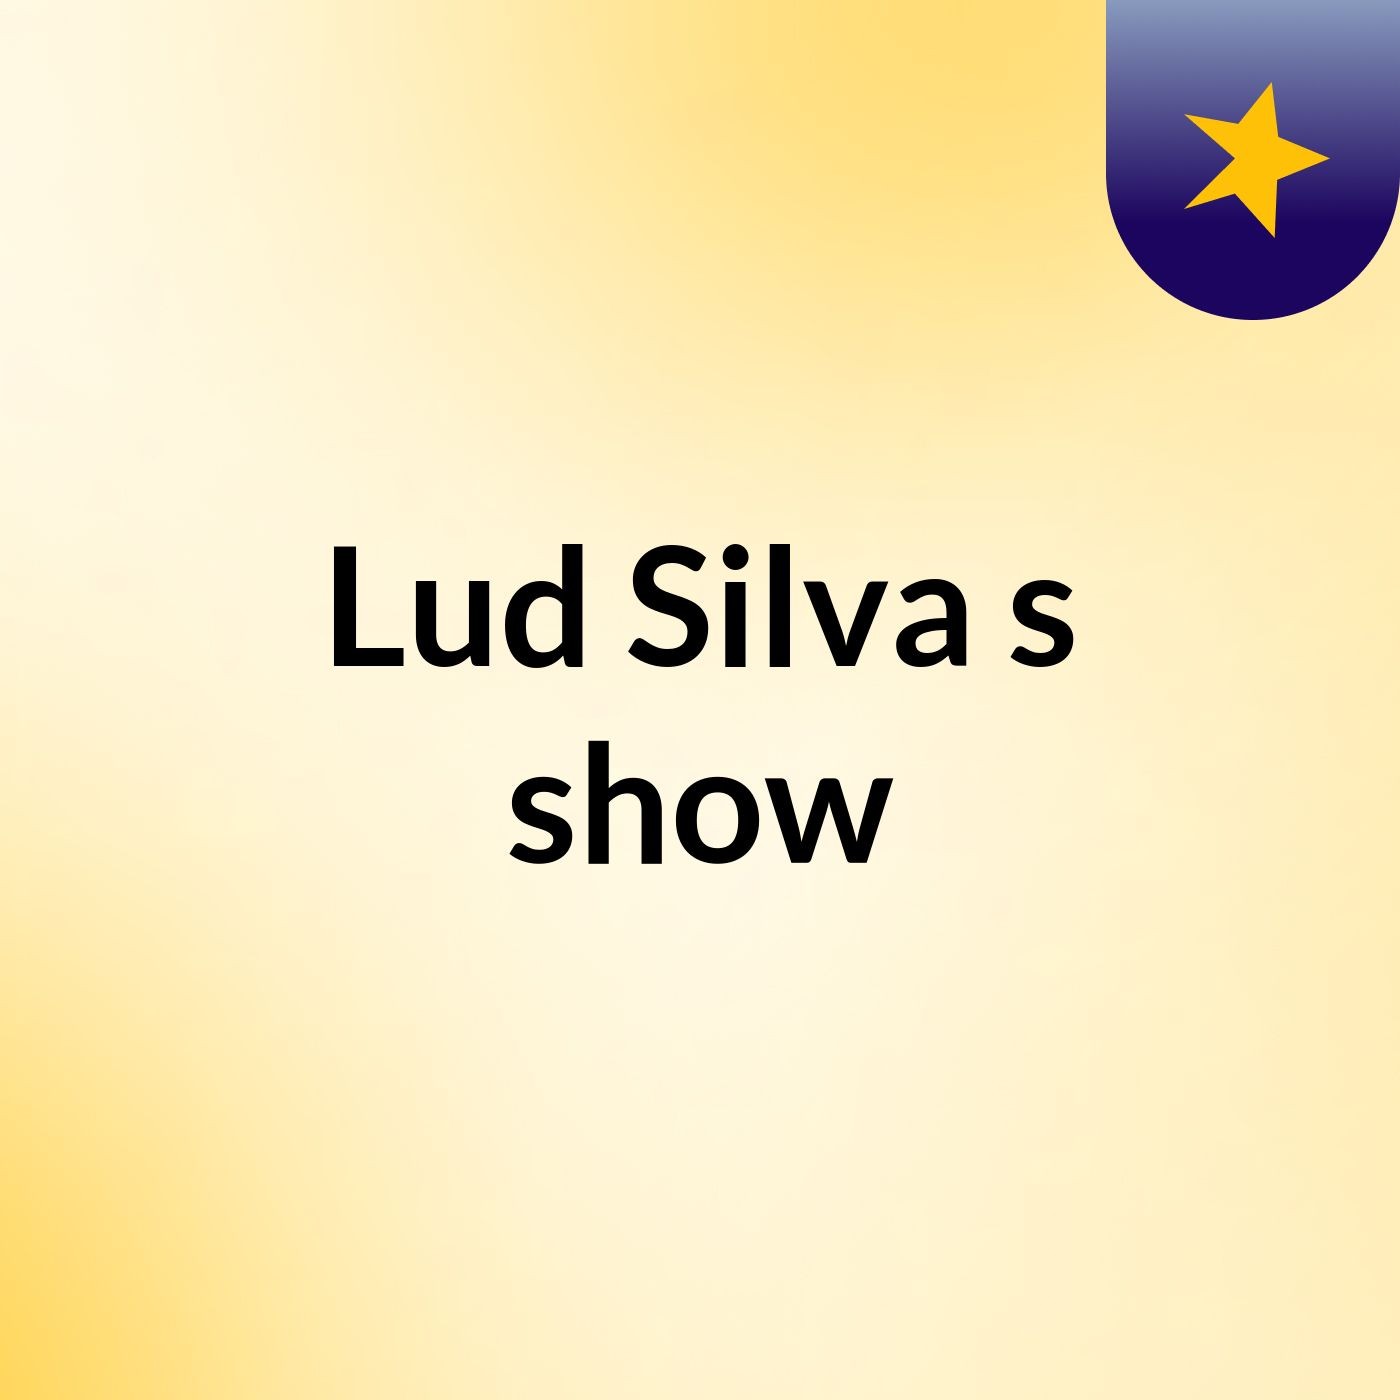 Lud Silva's show